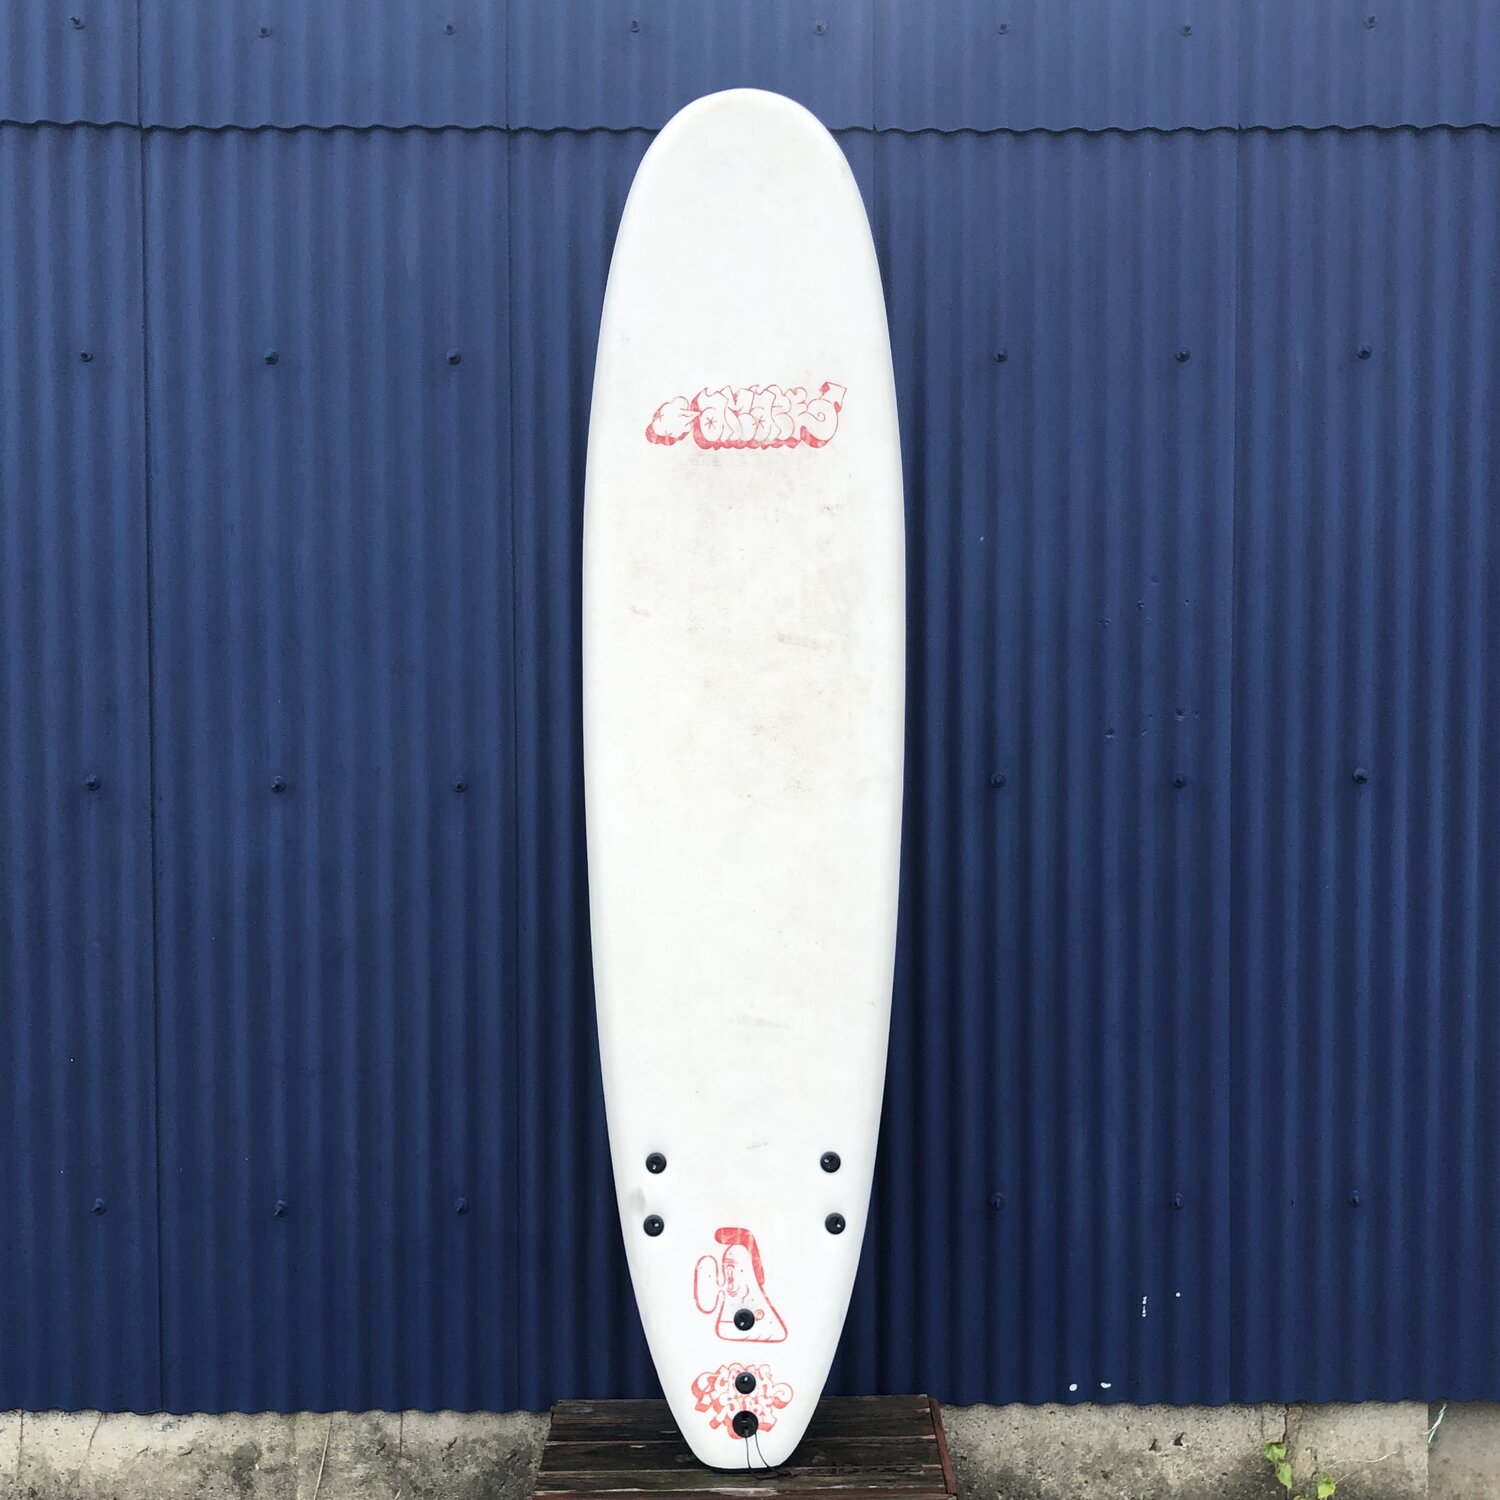 SURFBOARDS JP — Surfers Rentacar